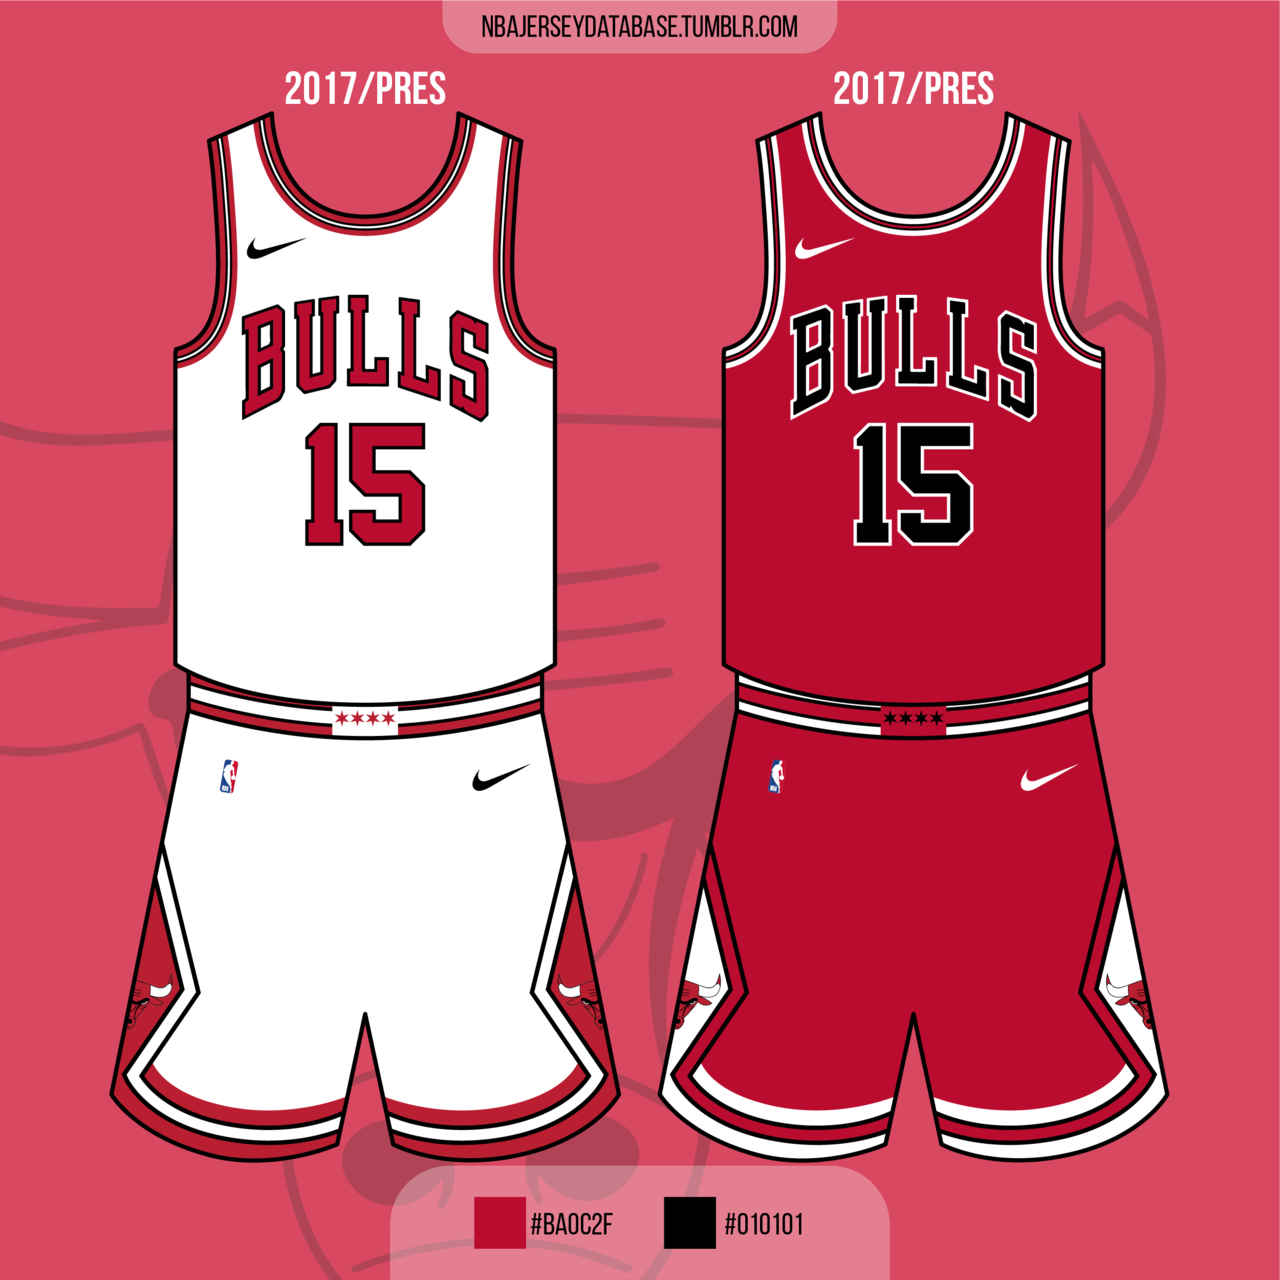 2017 bulls jersey